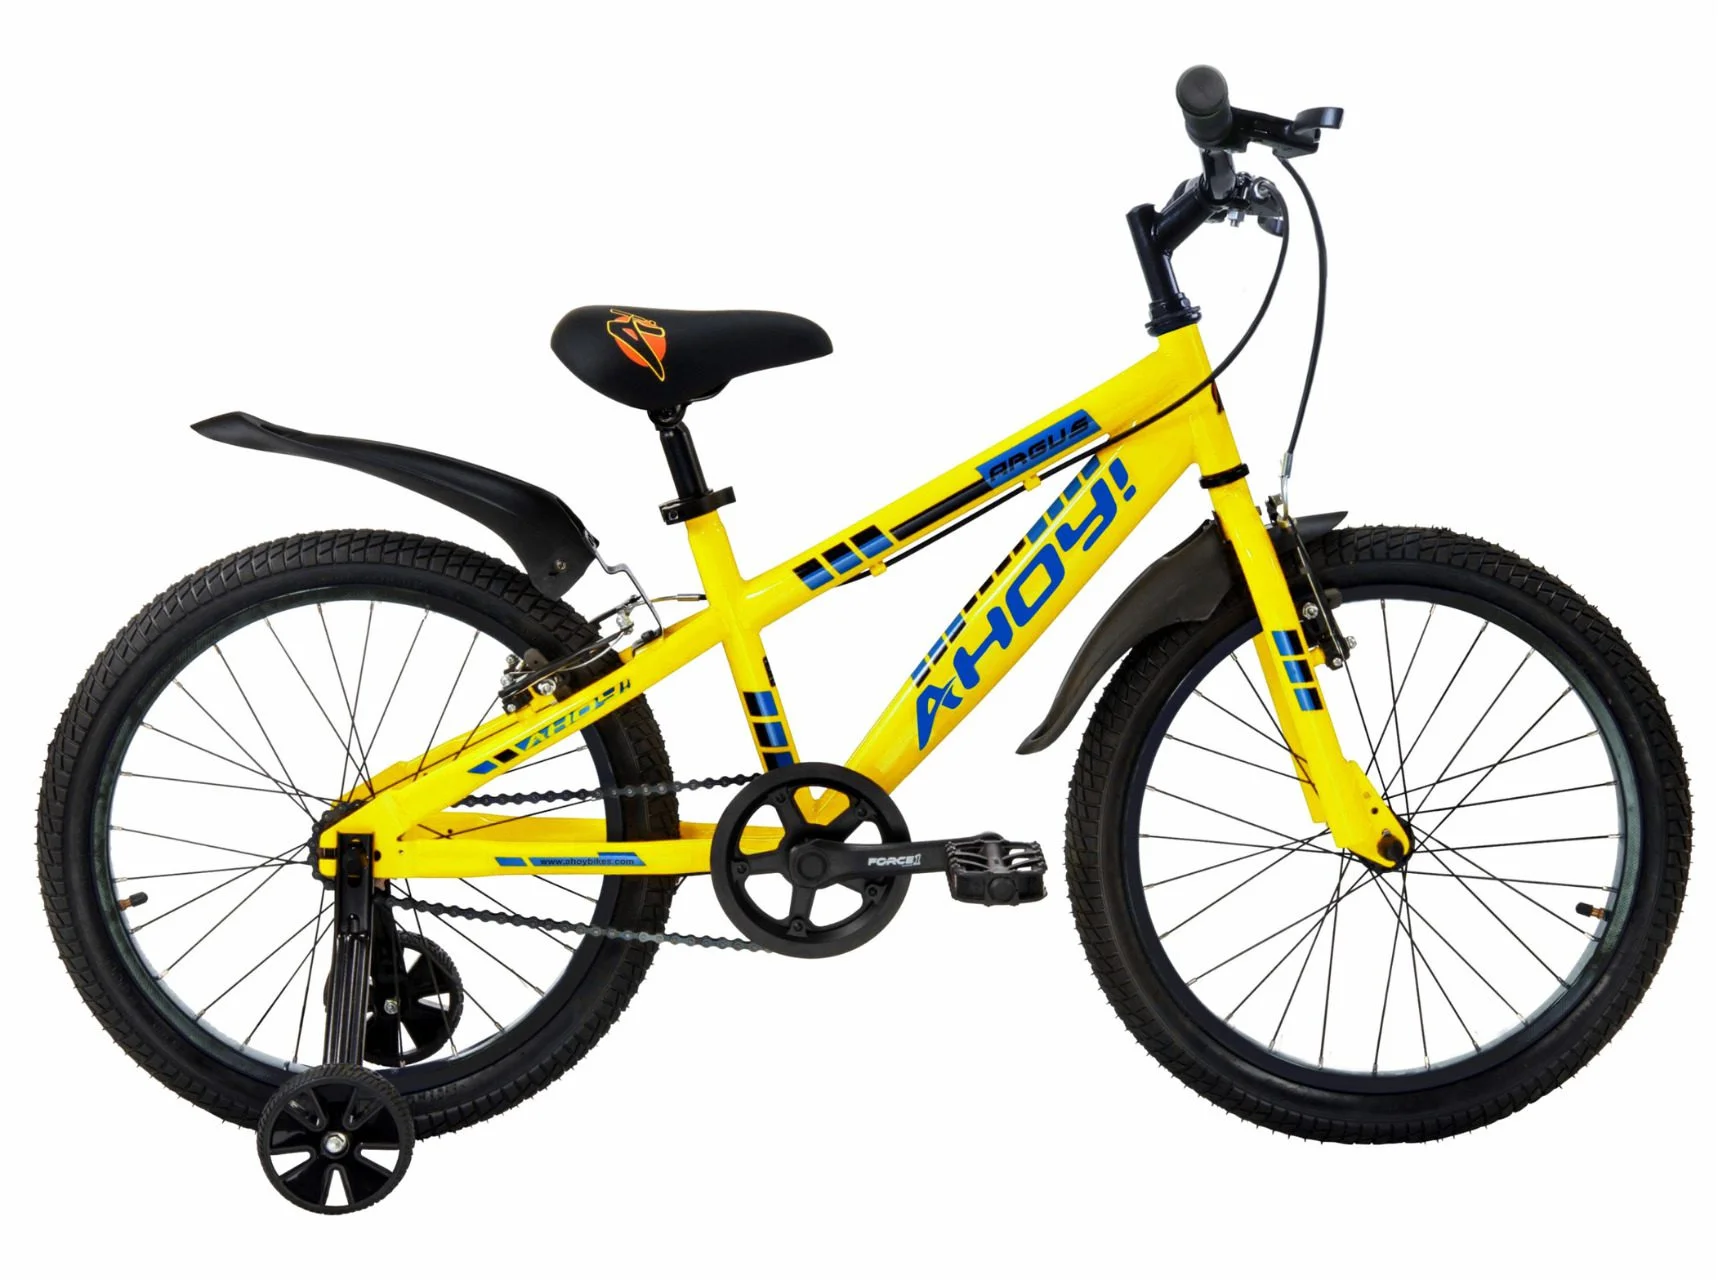 Argus Childrens Bike Single Speed 20T | Buy Yellow Kids Bike for Boys